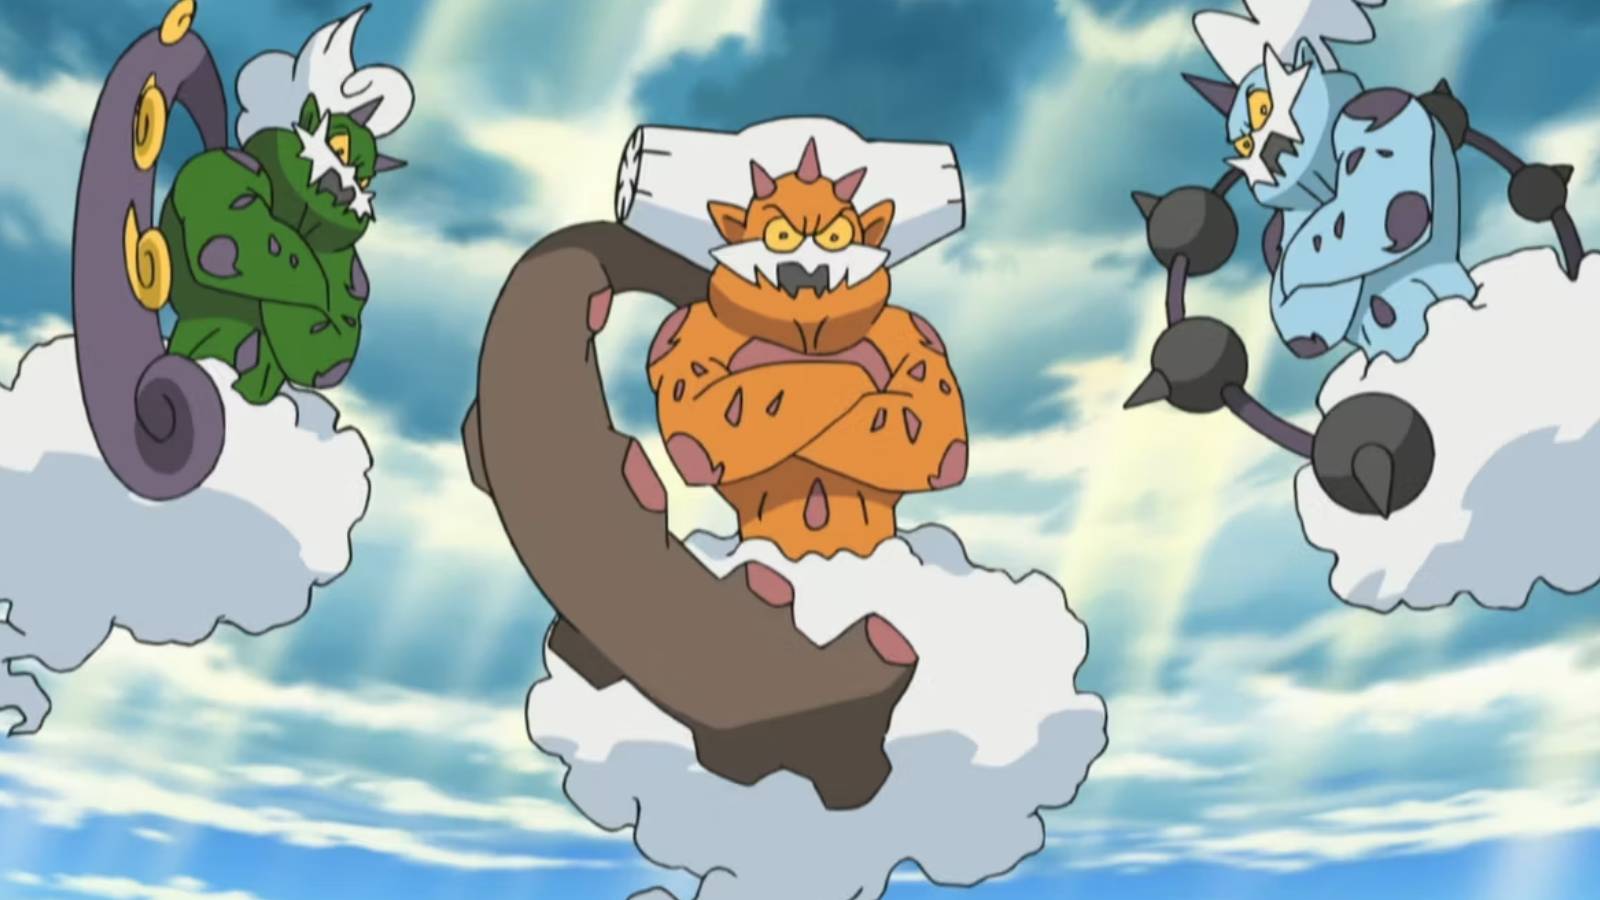 The Pokemon Landorus, Tornadus, and Thundurus, float in the sky